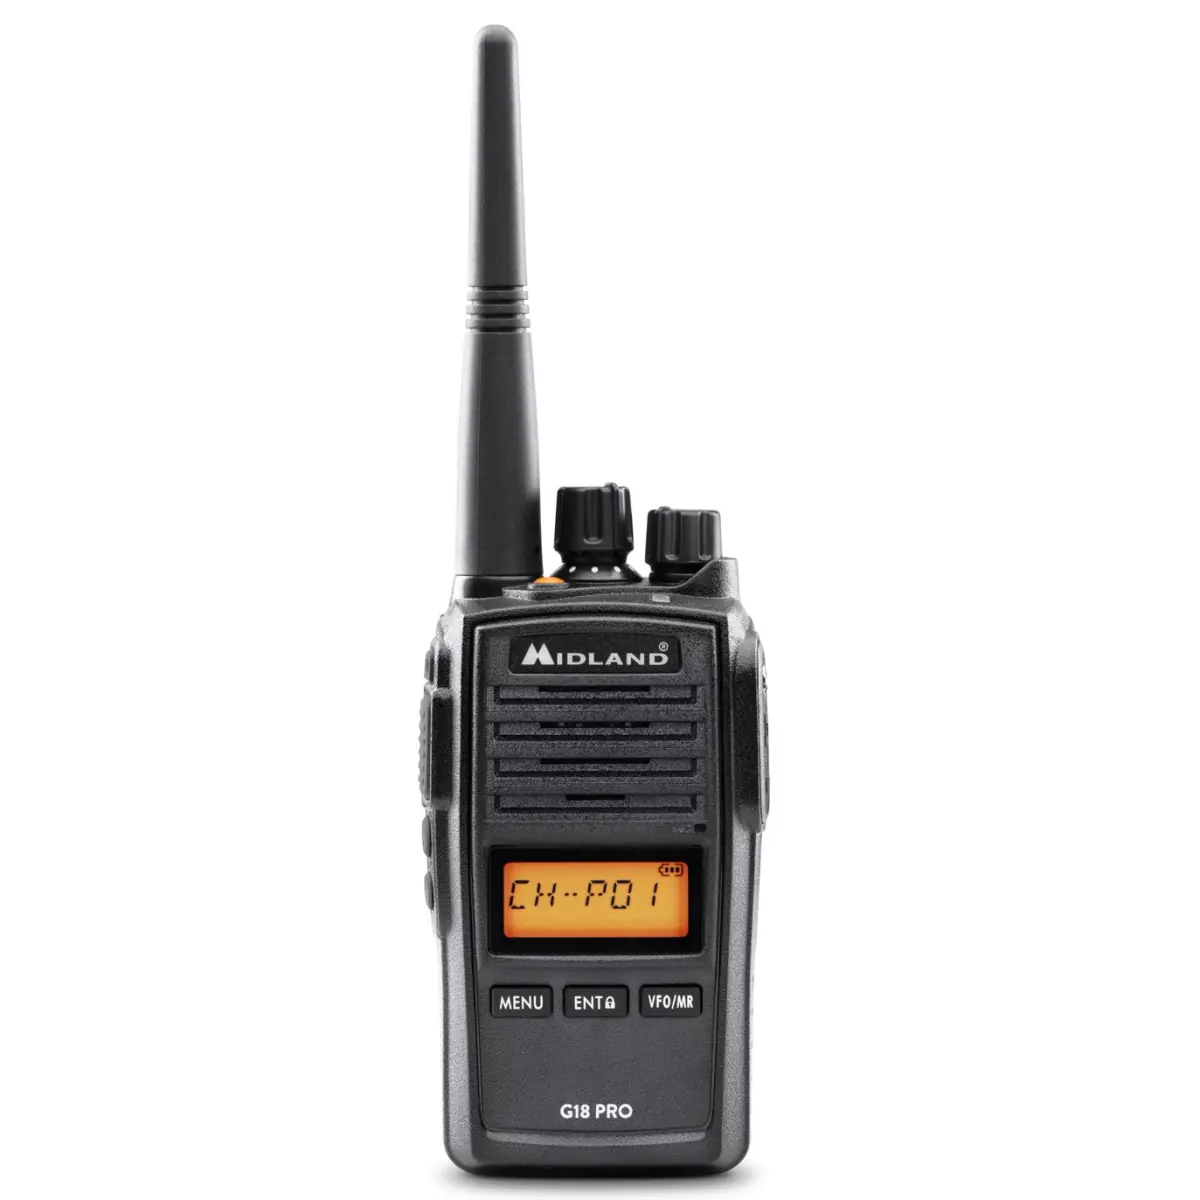  Pack de 2 Midland G18 Pro + Mallette de transport - Talkie walkie sans licence